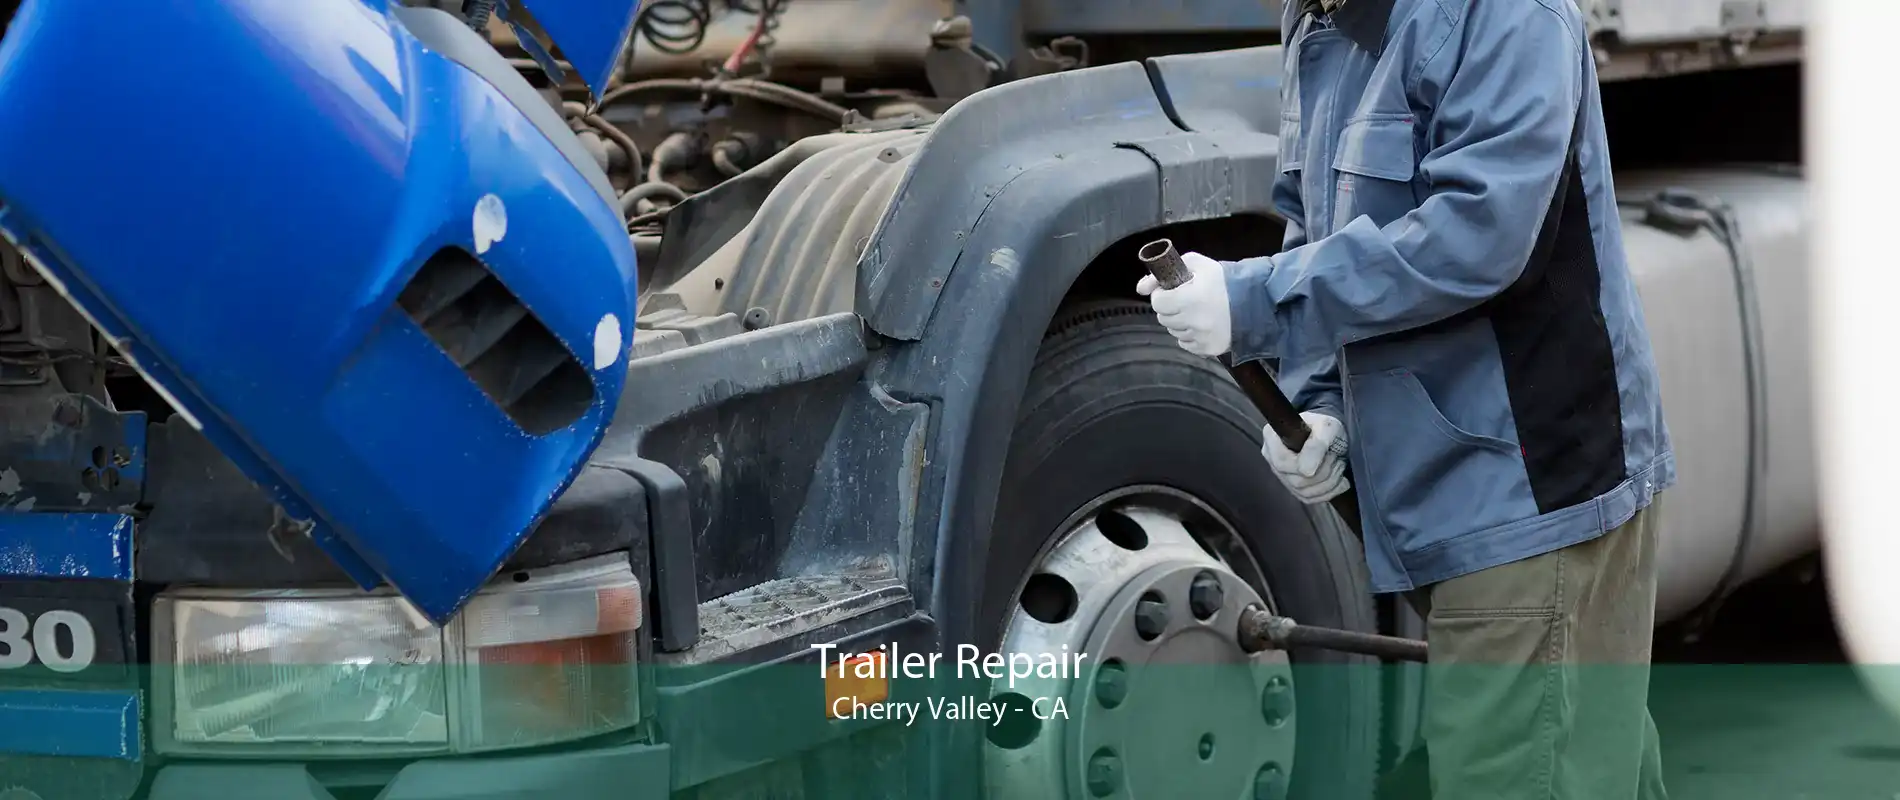 Trailer Repair Cherry Valley - CA